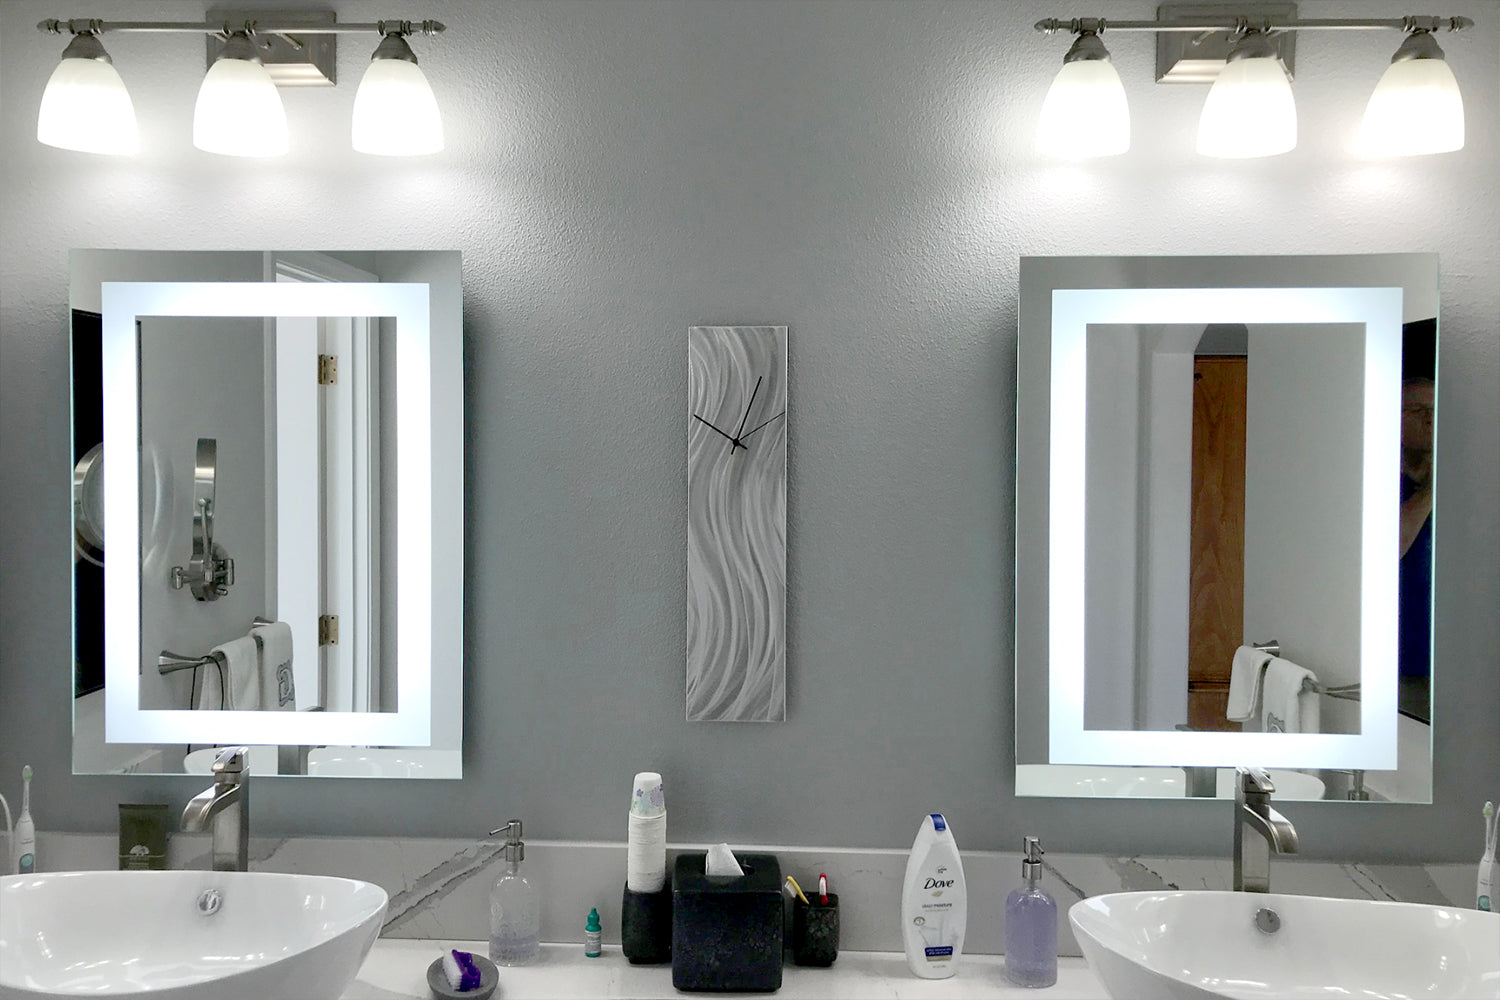 Bathroom Mirror For 24 Inch Vanity